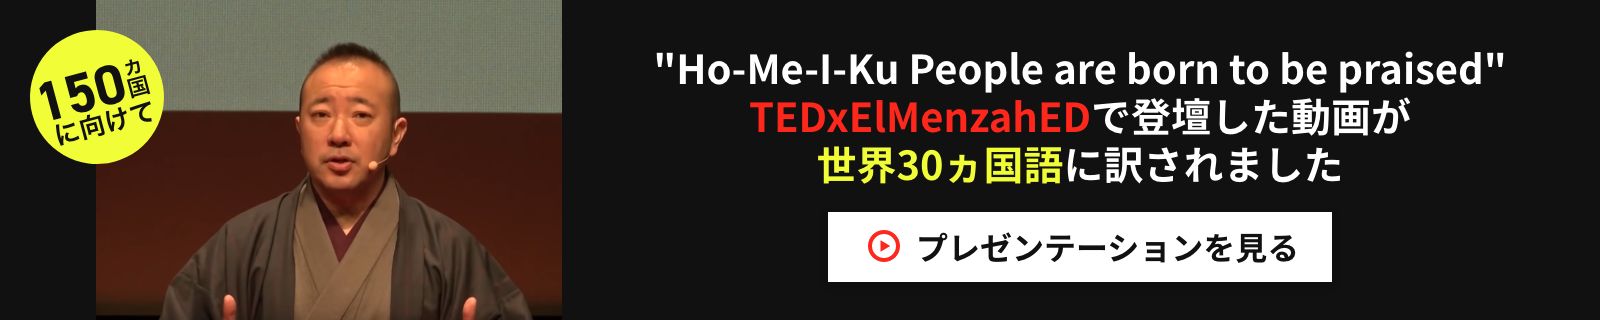 Ho-Me-I-Ku People are born to be praised TEDxElMenzahEDで登壇した動画が公開されました プレゼンテーションを見る